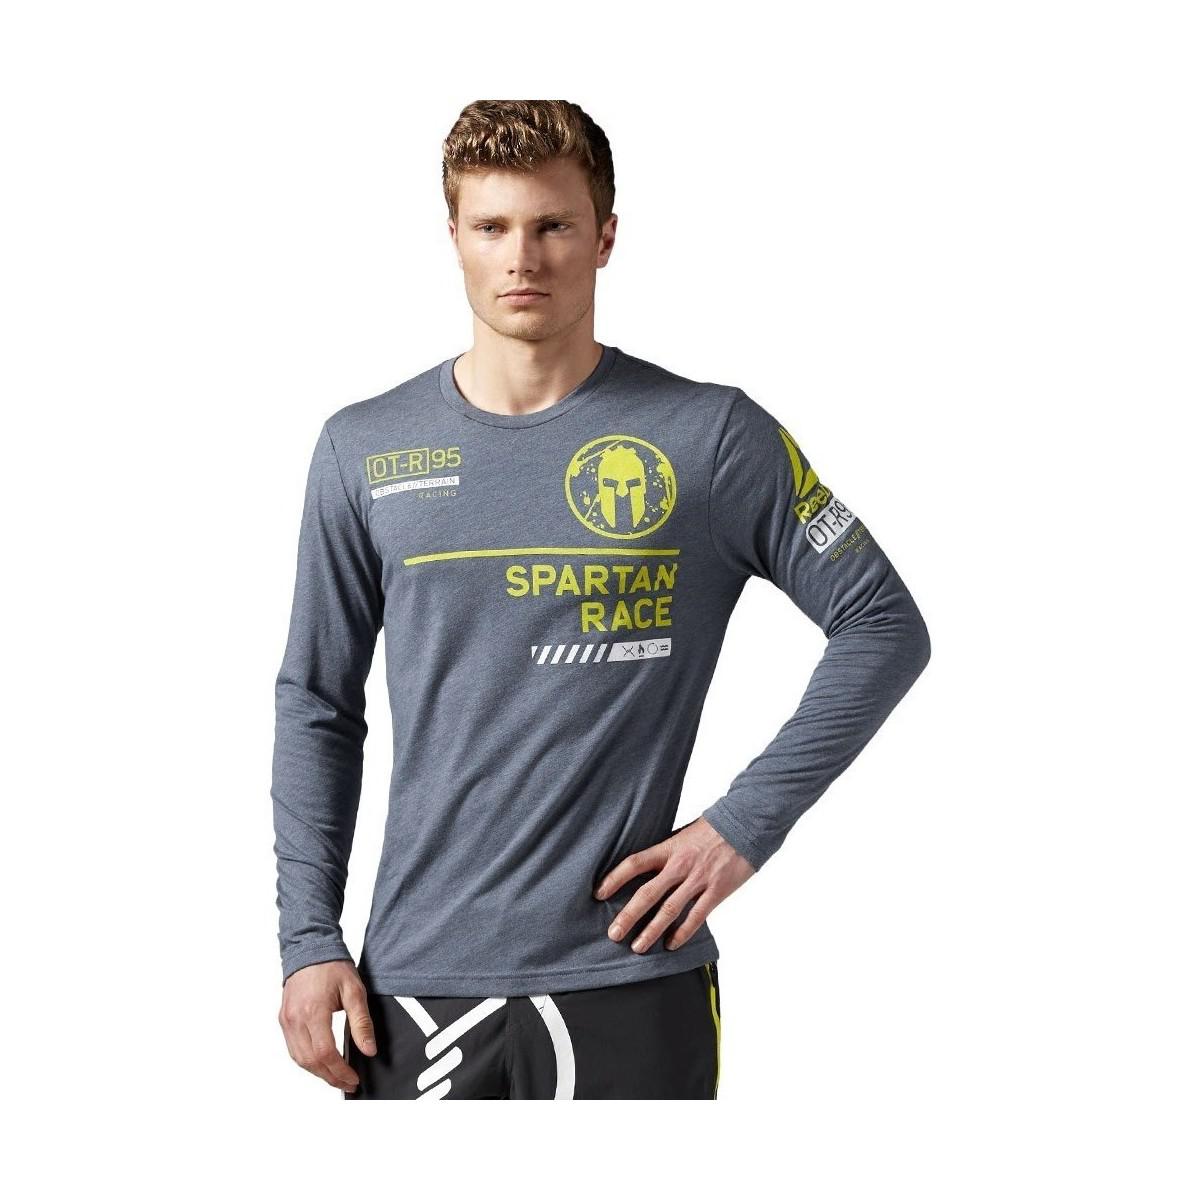 Reebok Spartan Race T Shirts Flash Sales, SAVE 59% - fearthemecca.com